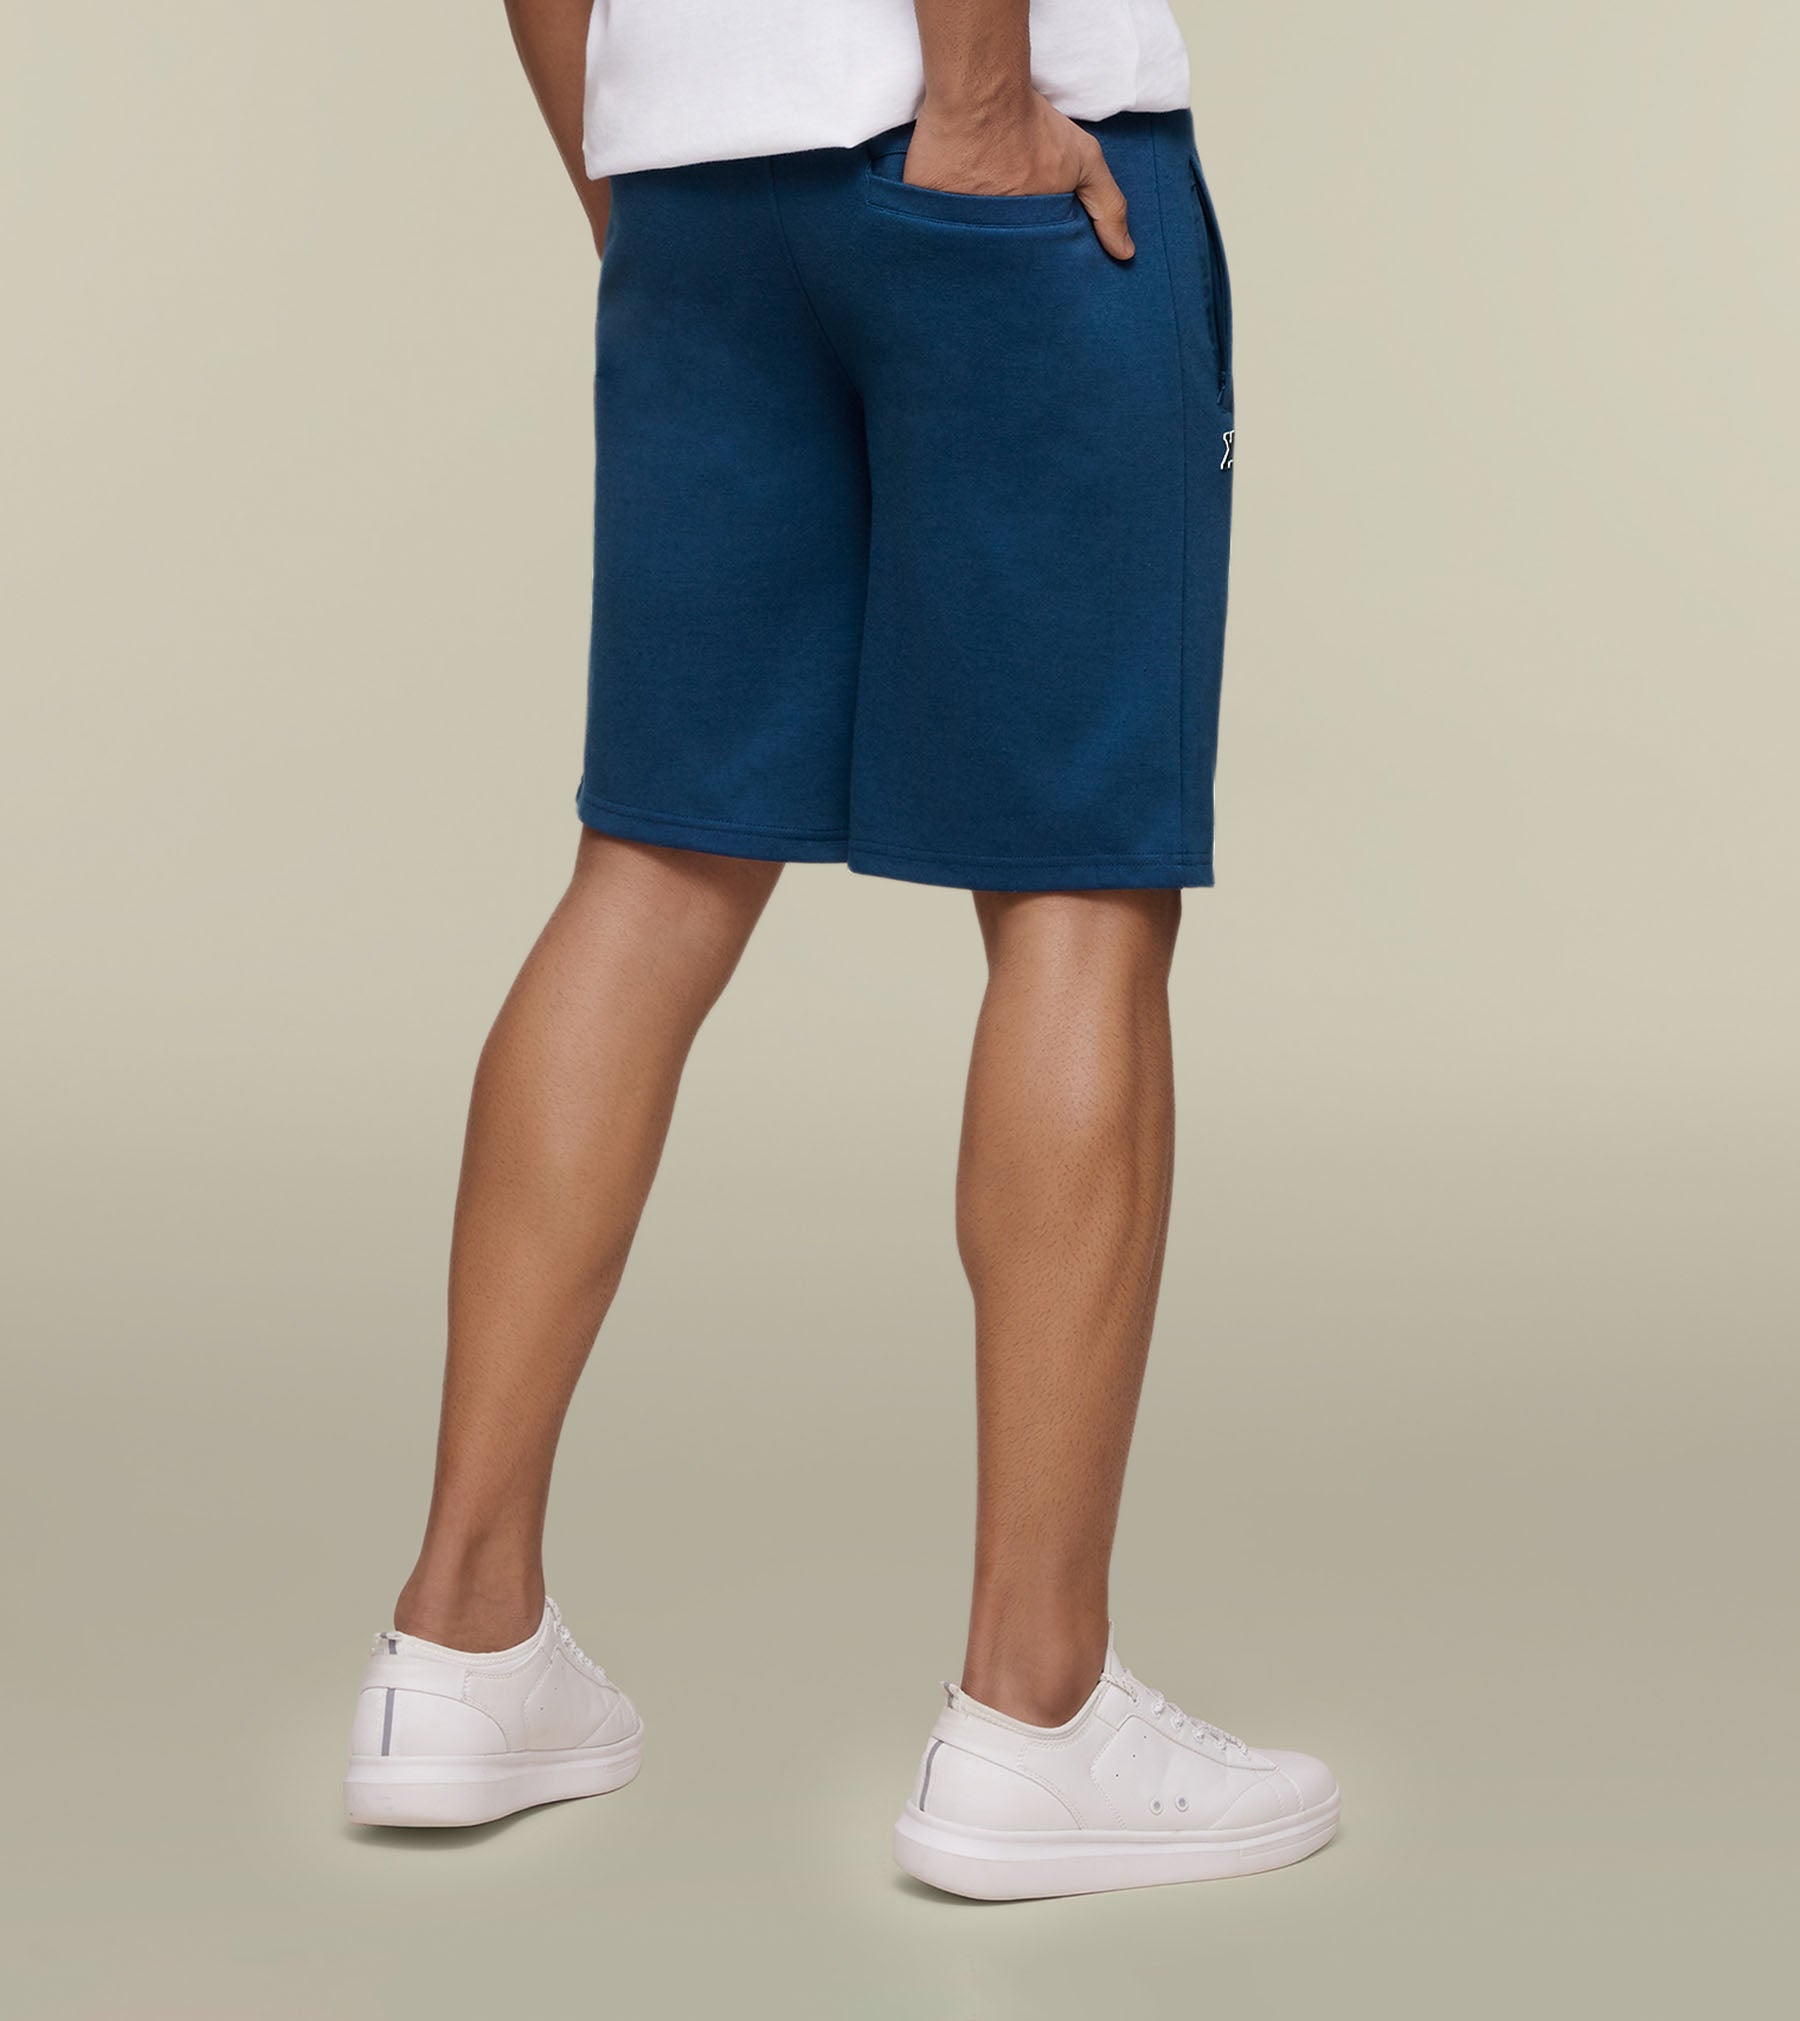 Code Cotton Rich Shorts For Men Oxford Blue - XYXX Mens Apparels